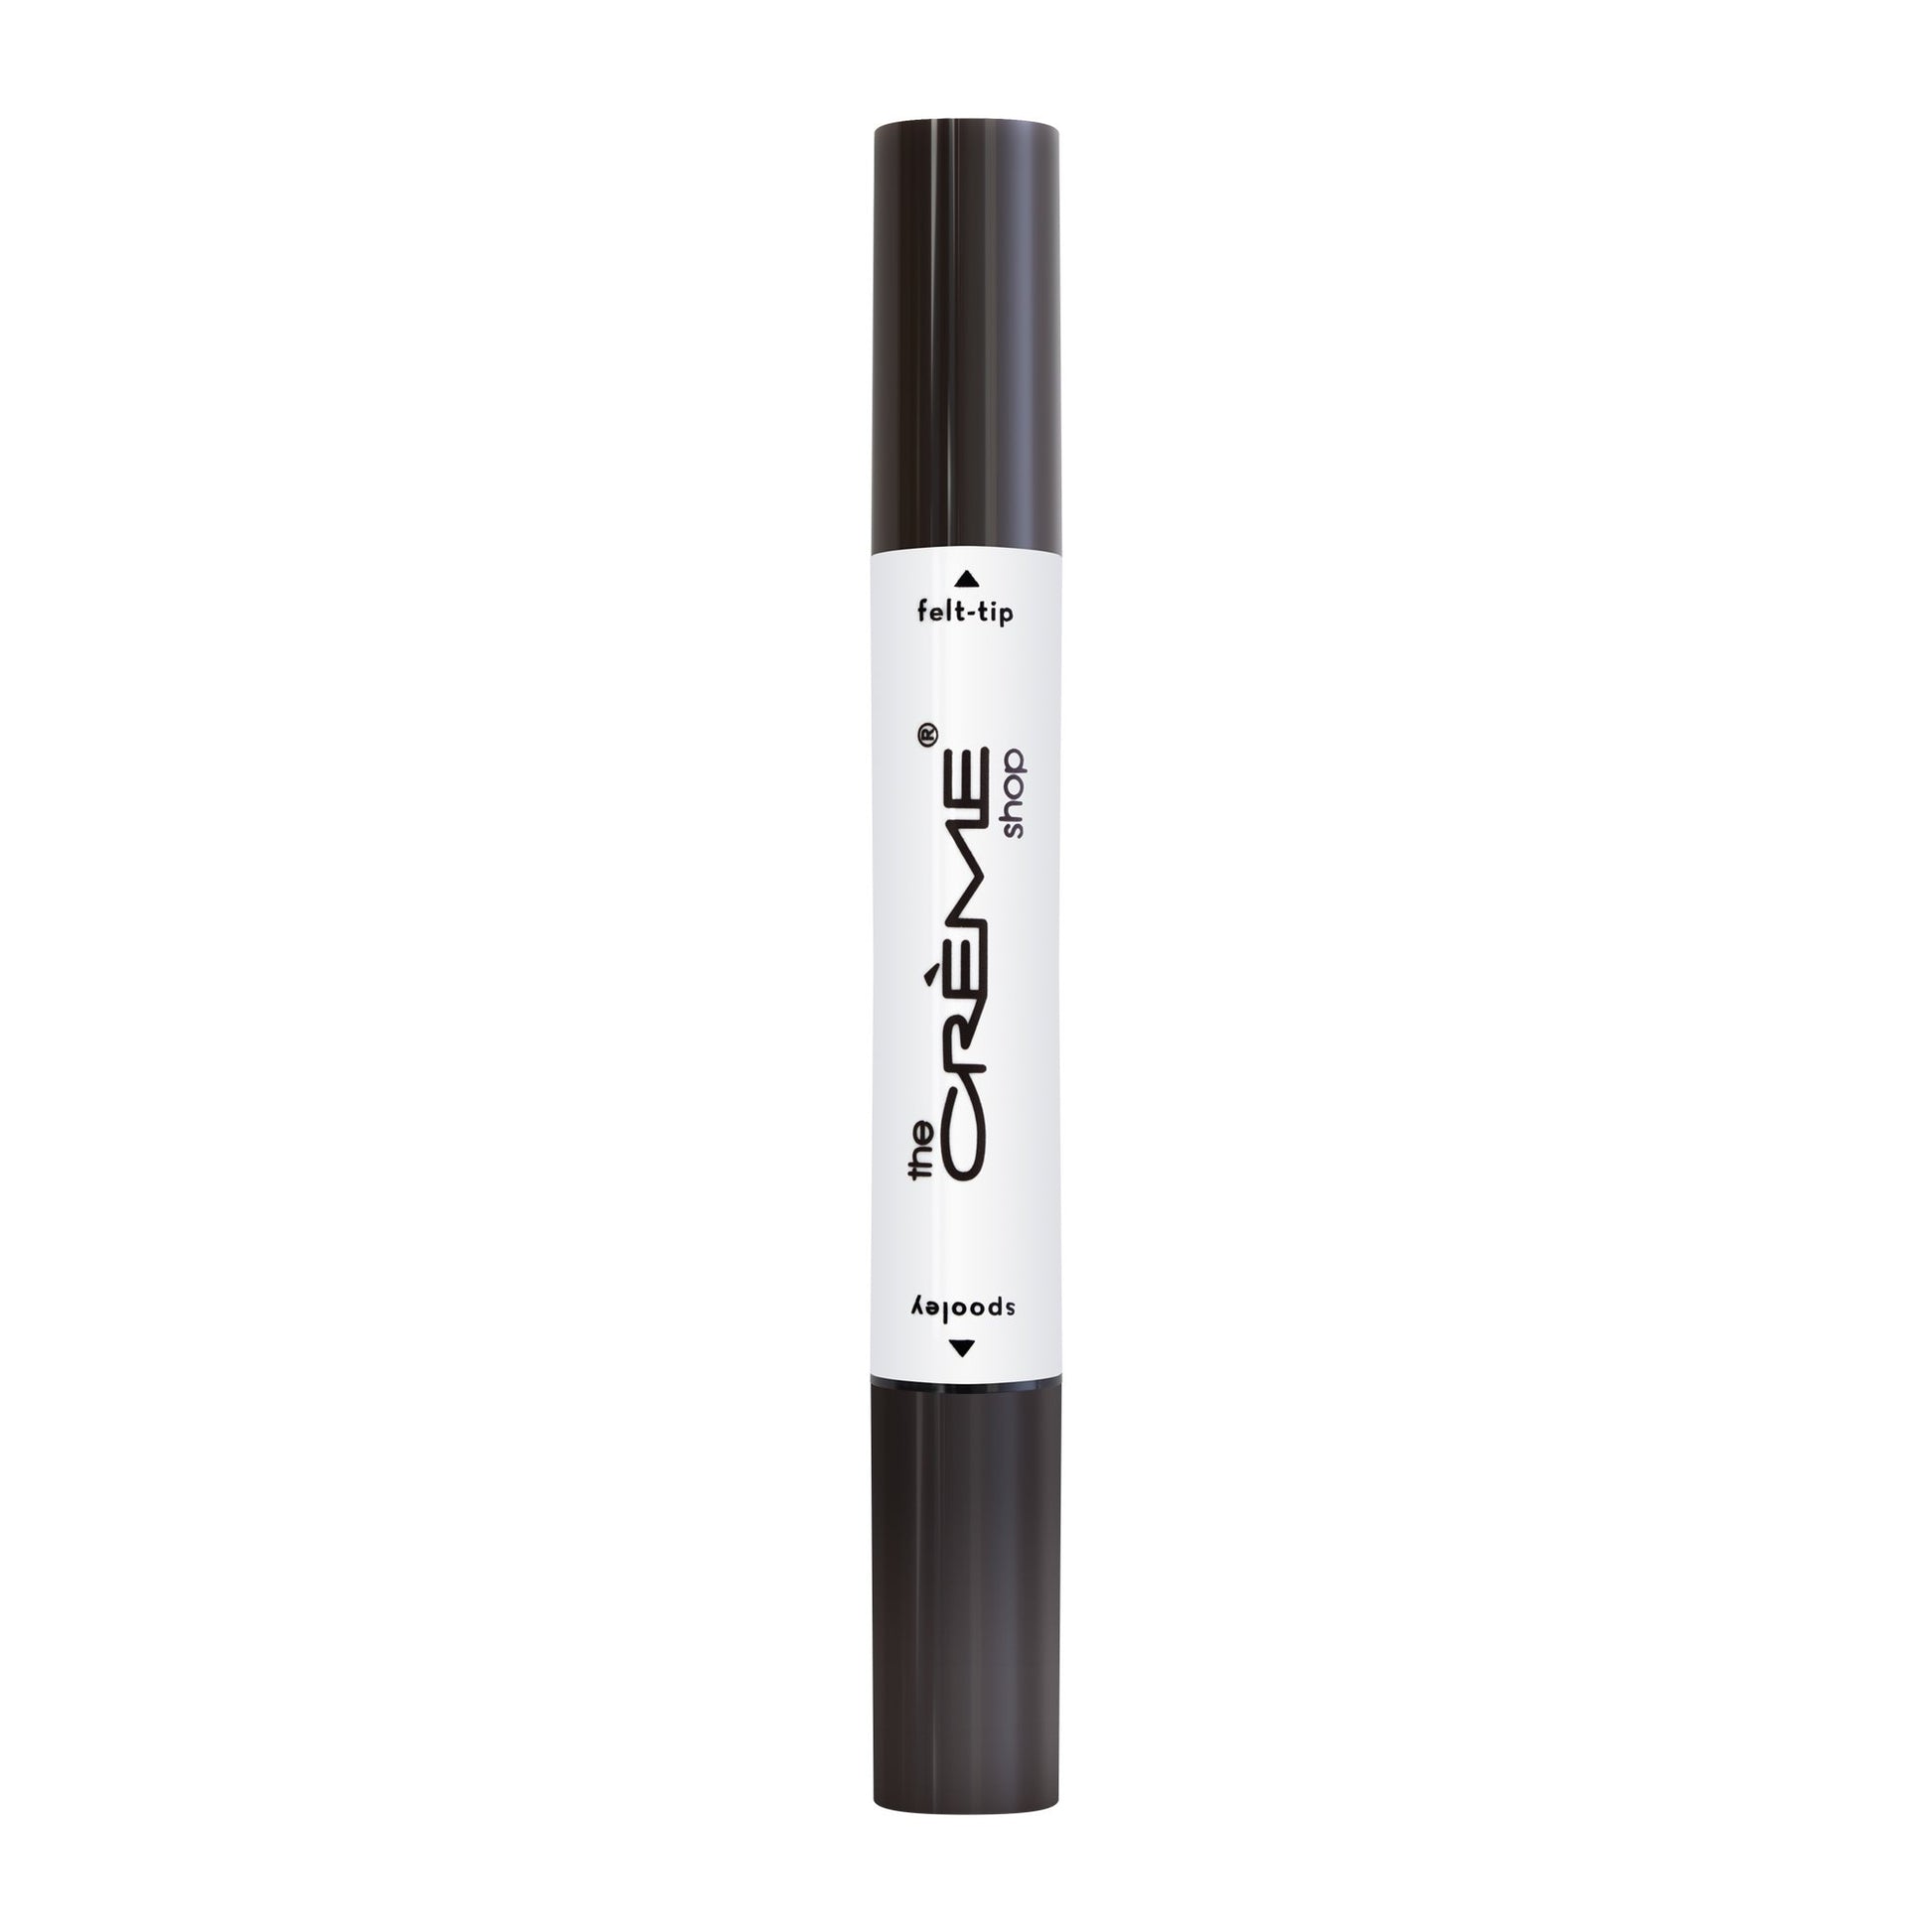 BIG Brow Marker | 2-In-1 Felt-Tip Brow Pen & Spooley Brow Pen The Crème Shop Dark (Big) 